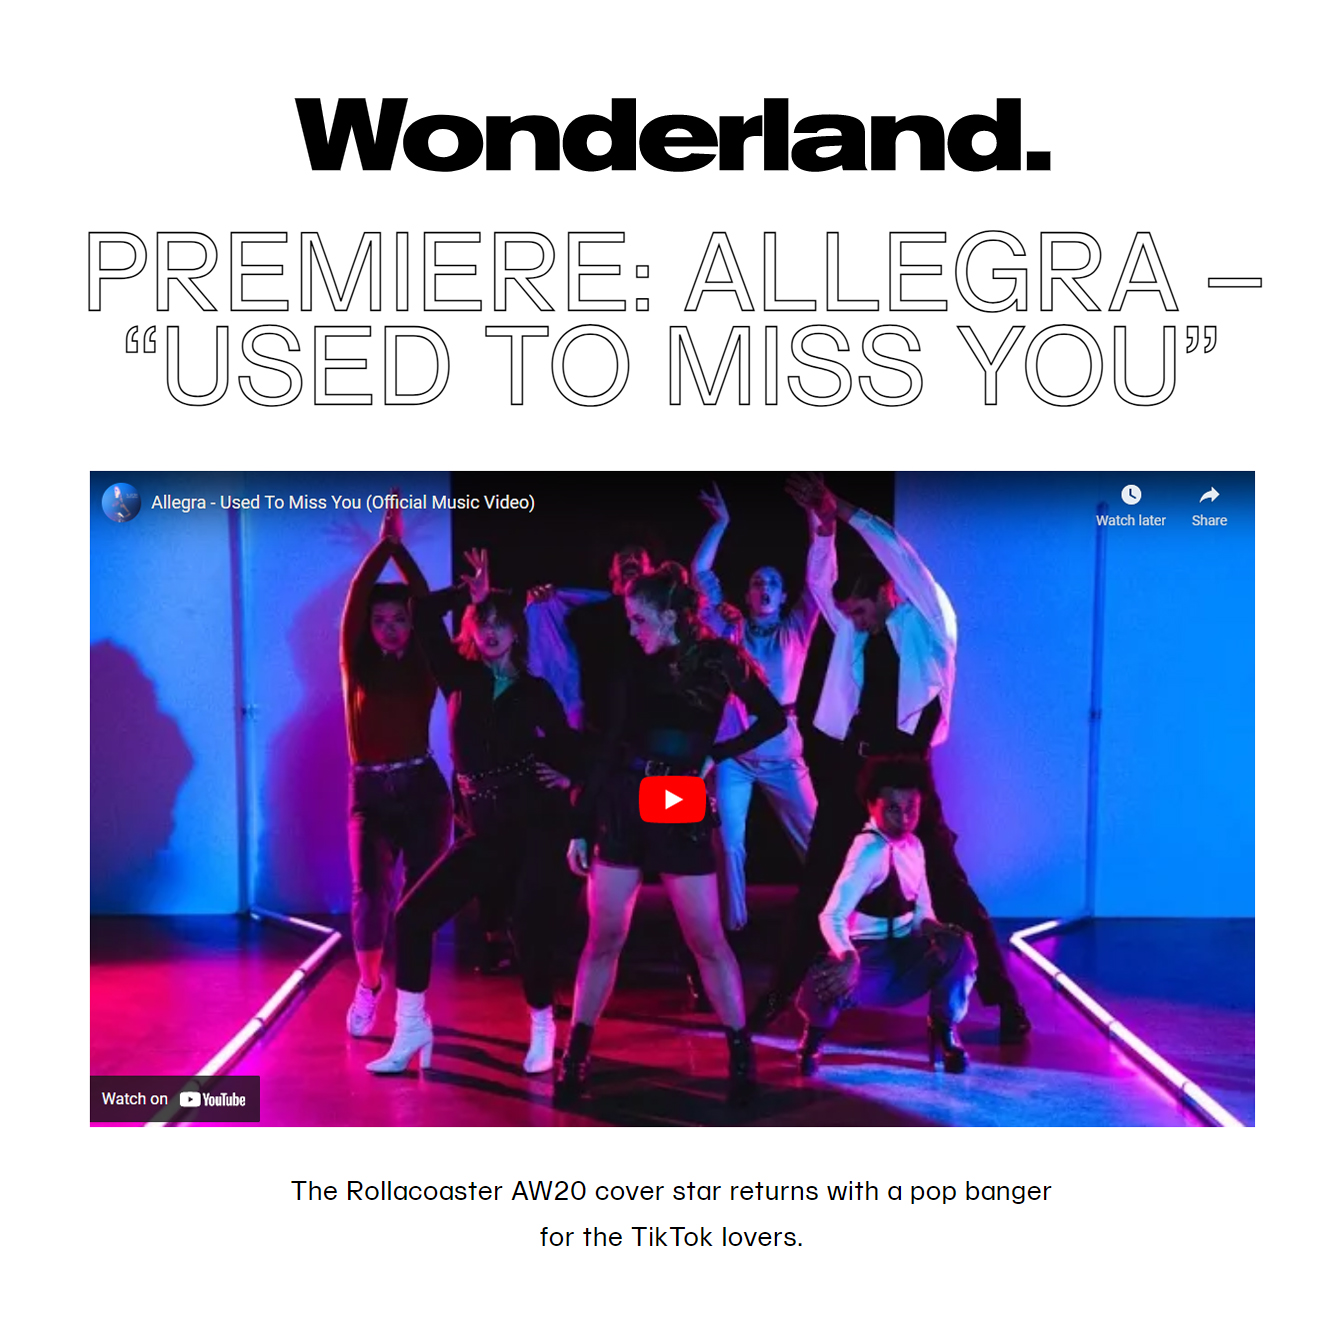 Allegra - Used To Miss You - Wonderland Music Video Premiere